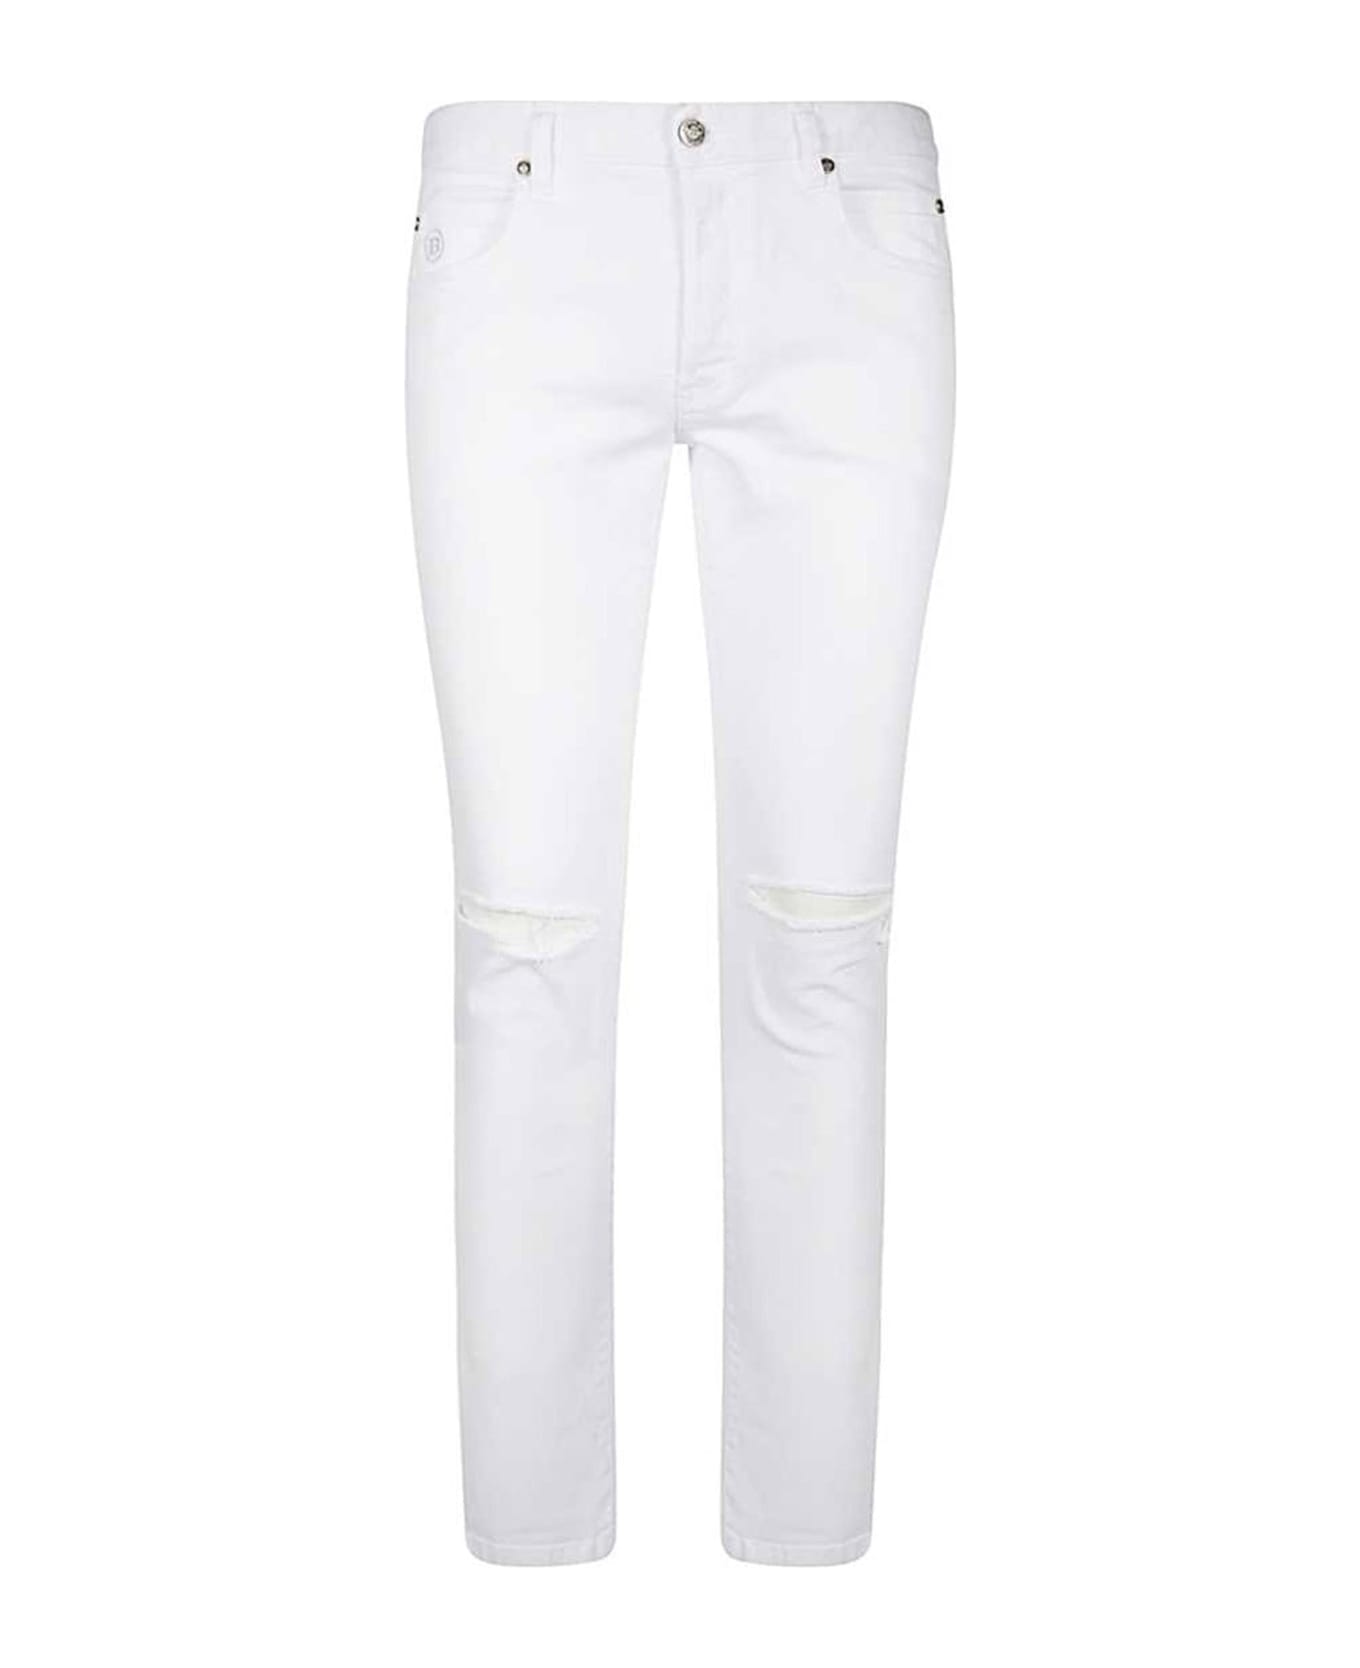 Balmain Skinny Jeans - White